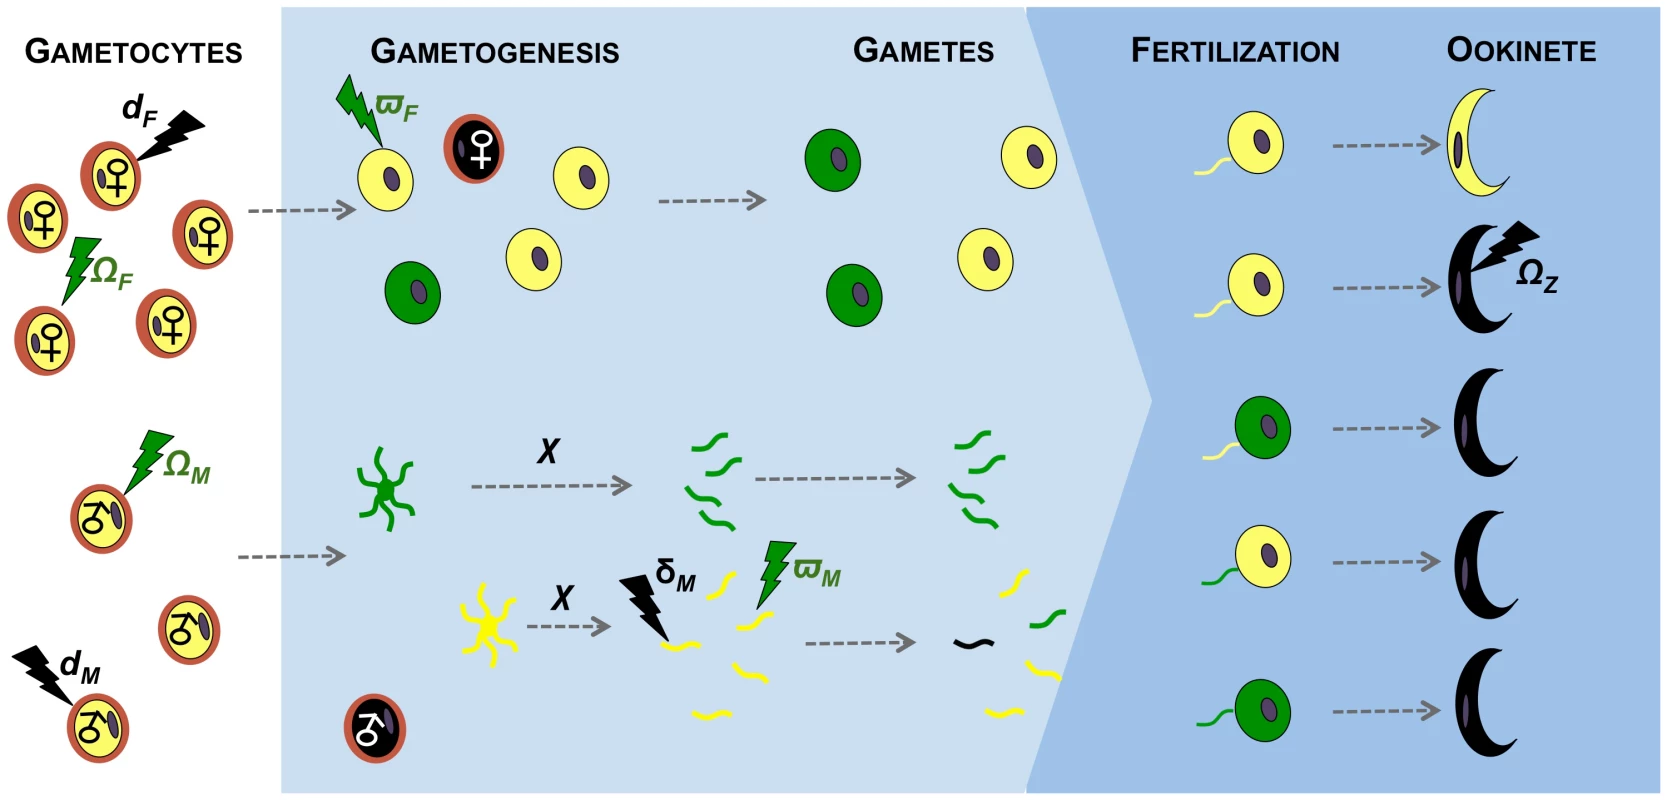 Effects of immunity on gametogenesis and fertility of malaria parasites.